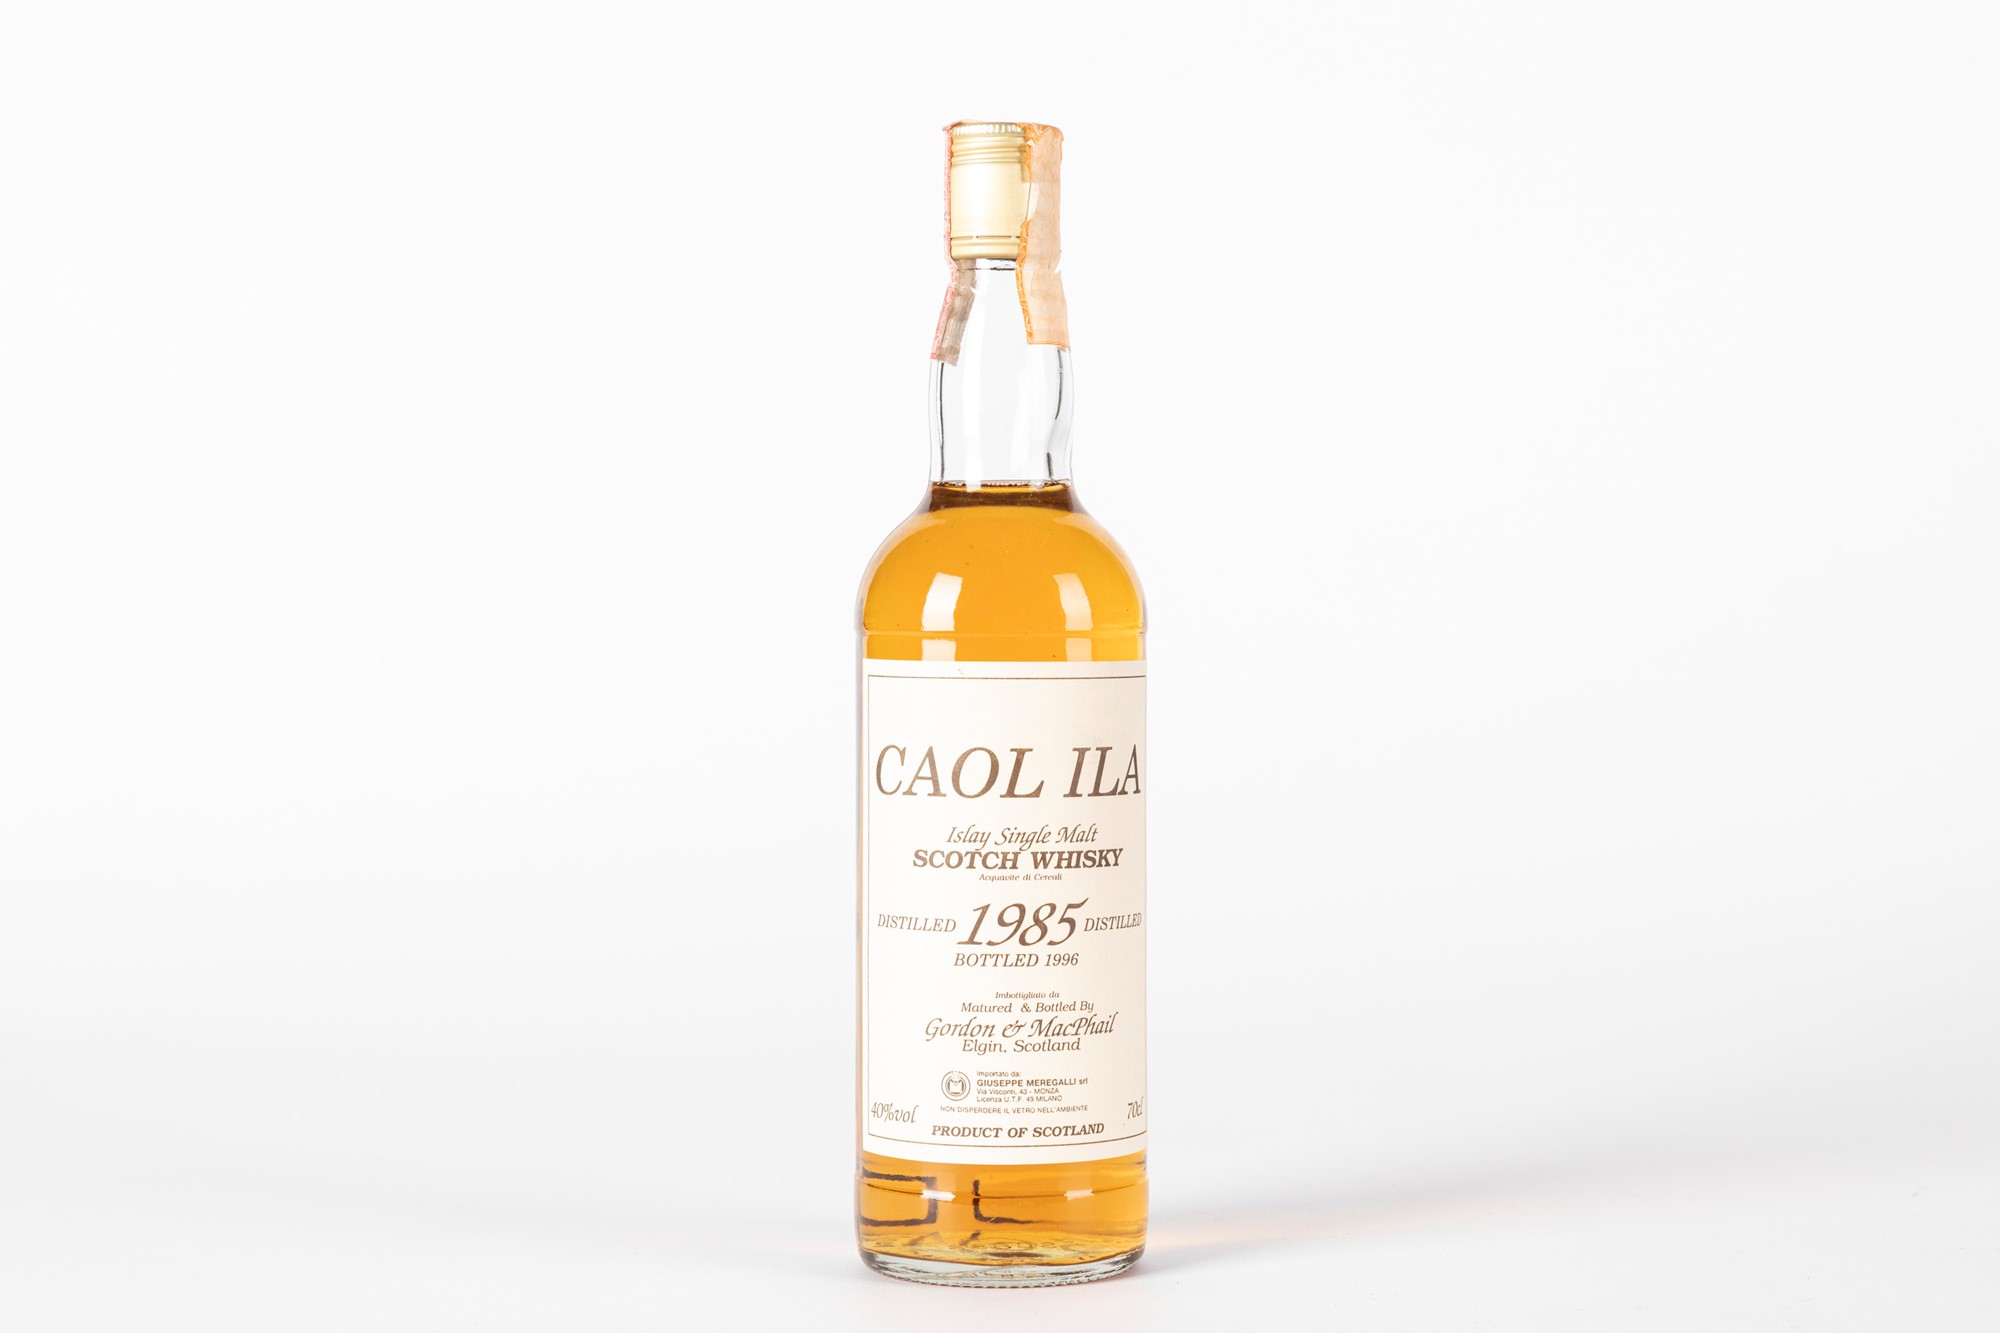 Scotland - Whisky / Caol Ila Distilled 1985 Bottled 1996